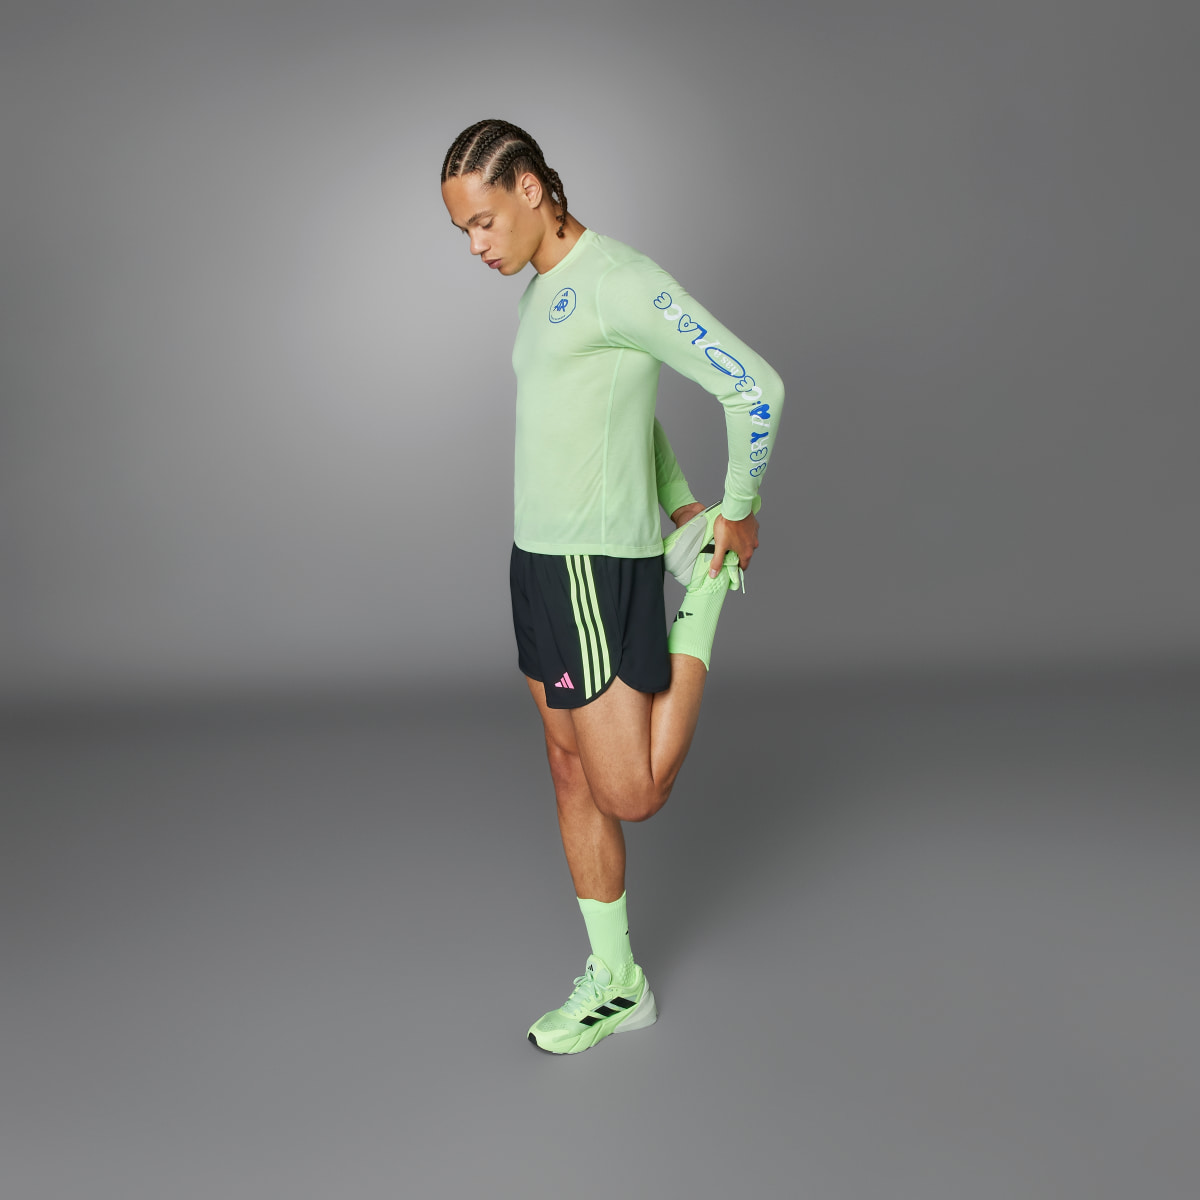 Adidas Own the Run adidas Runners Long Sleeve Long-Sleeve Top (Gender Neutral). 8